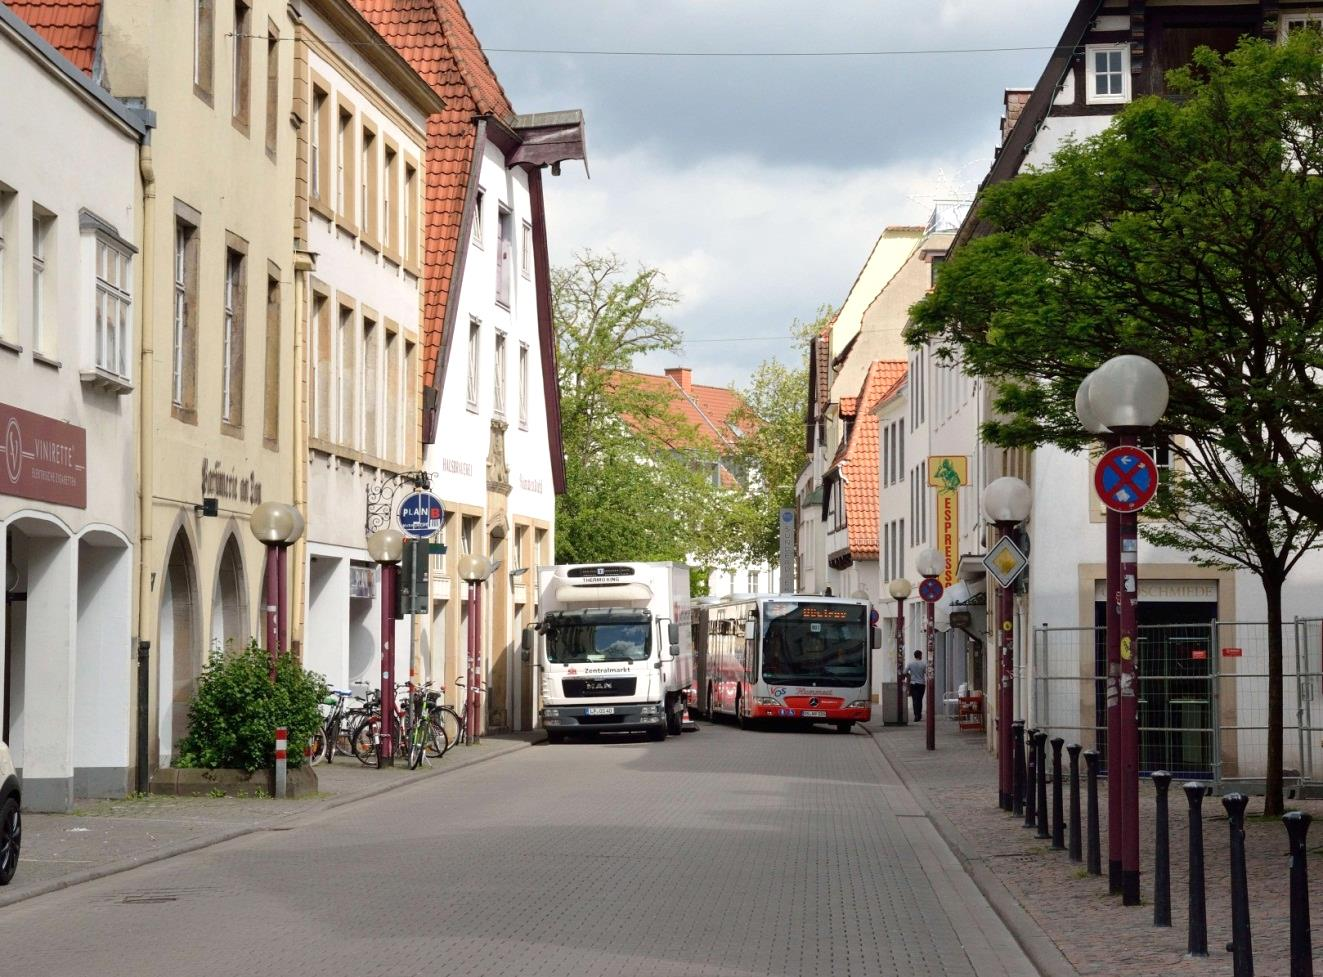 LfNr_Ku rzel_jjmmtt Ziele und Rahmenbedingungen in Osnabrück